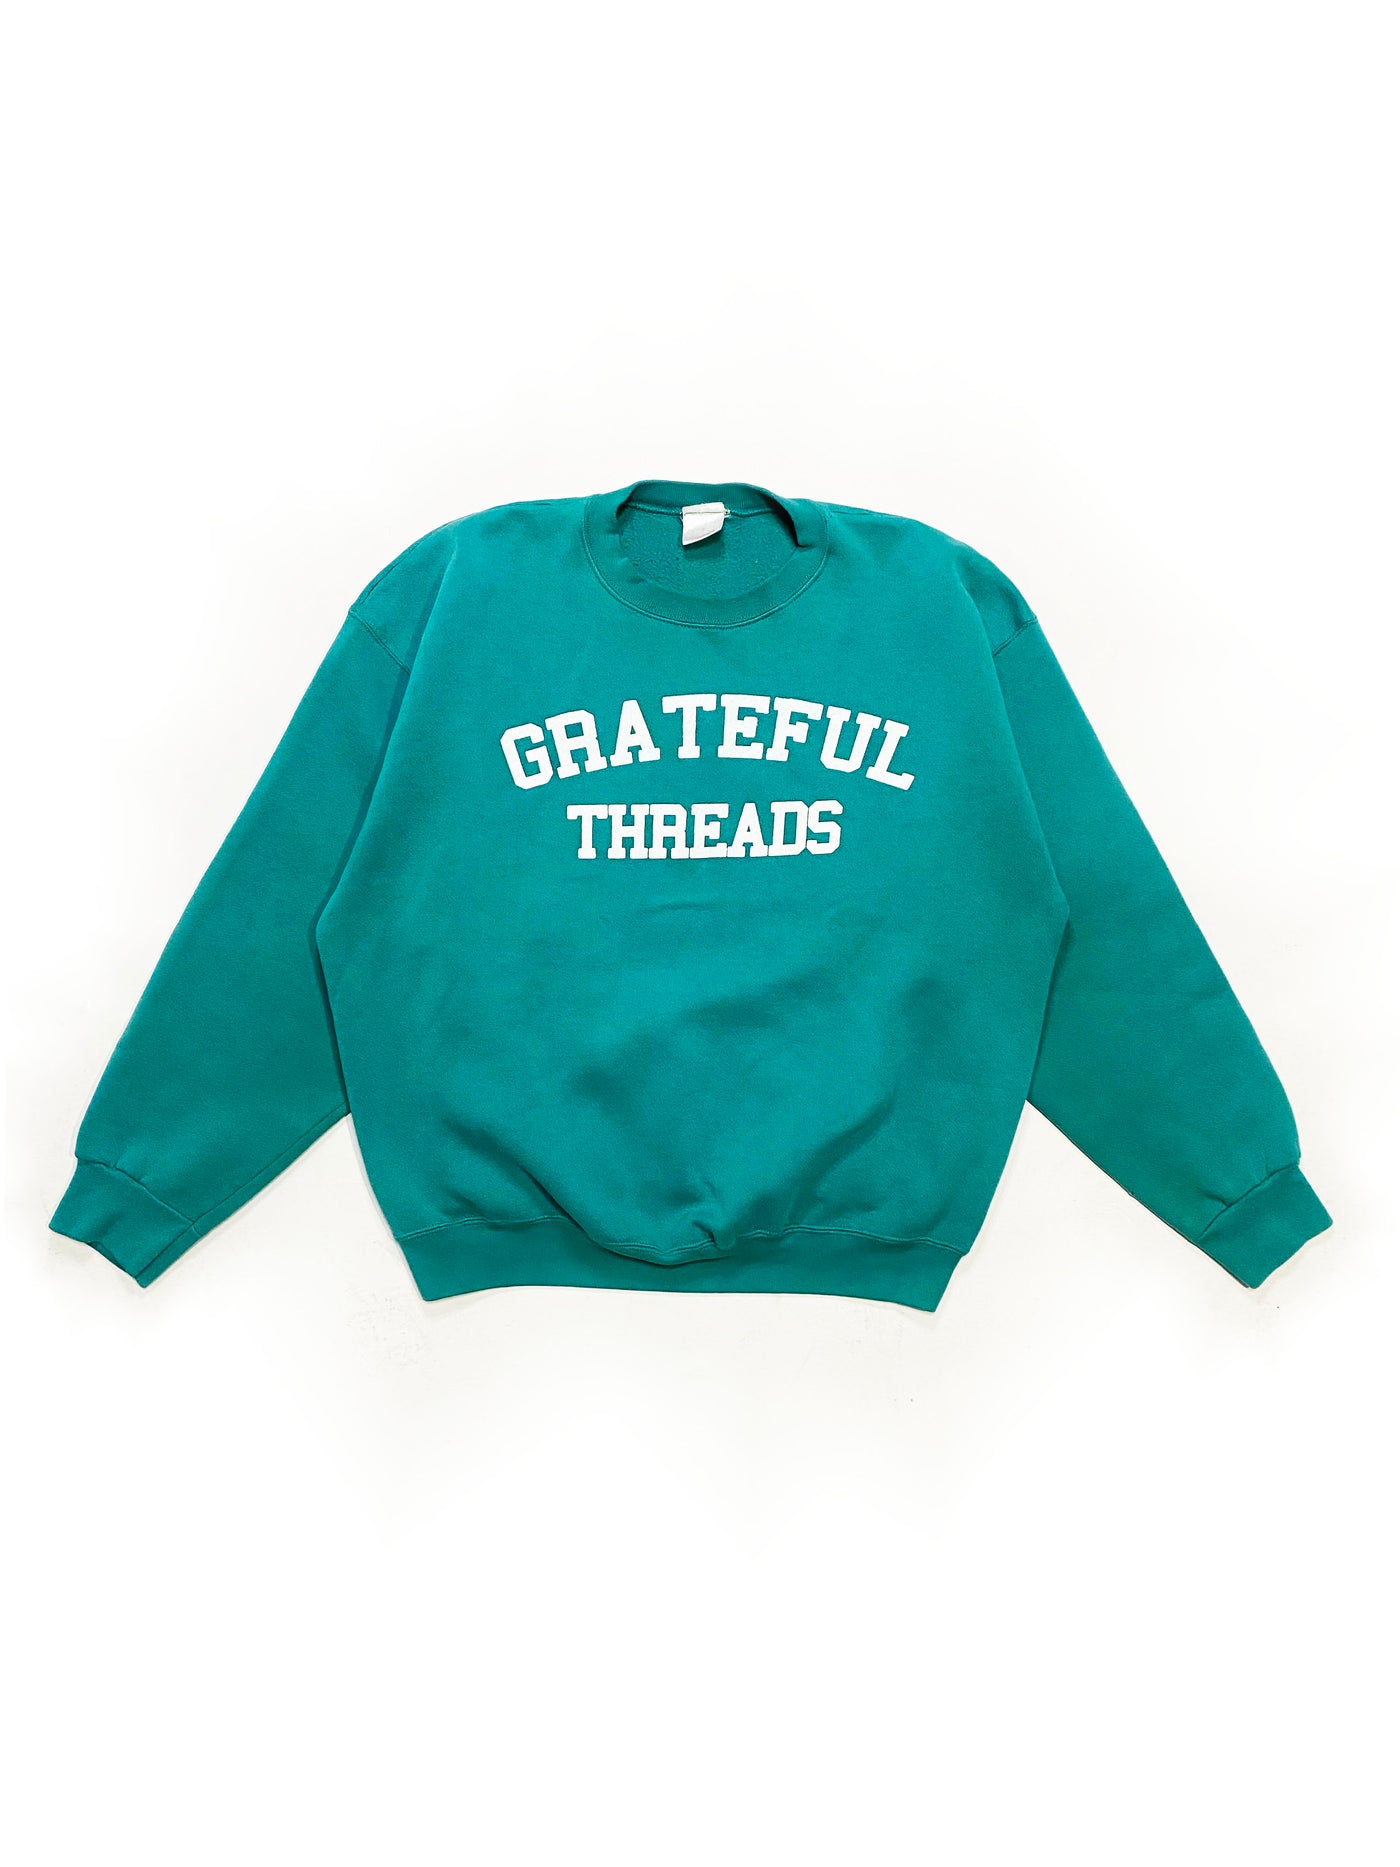 90s BVD Grateful Threads Spellout Crewneck - Teal - Size L